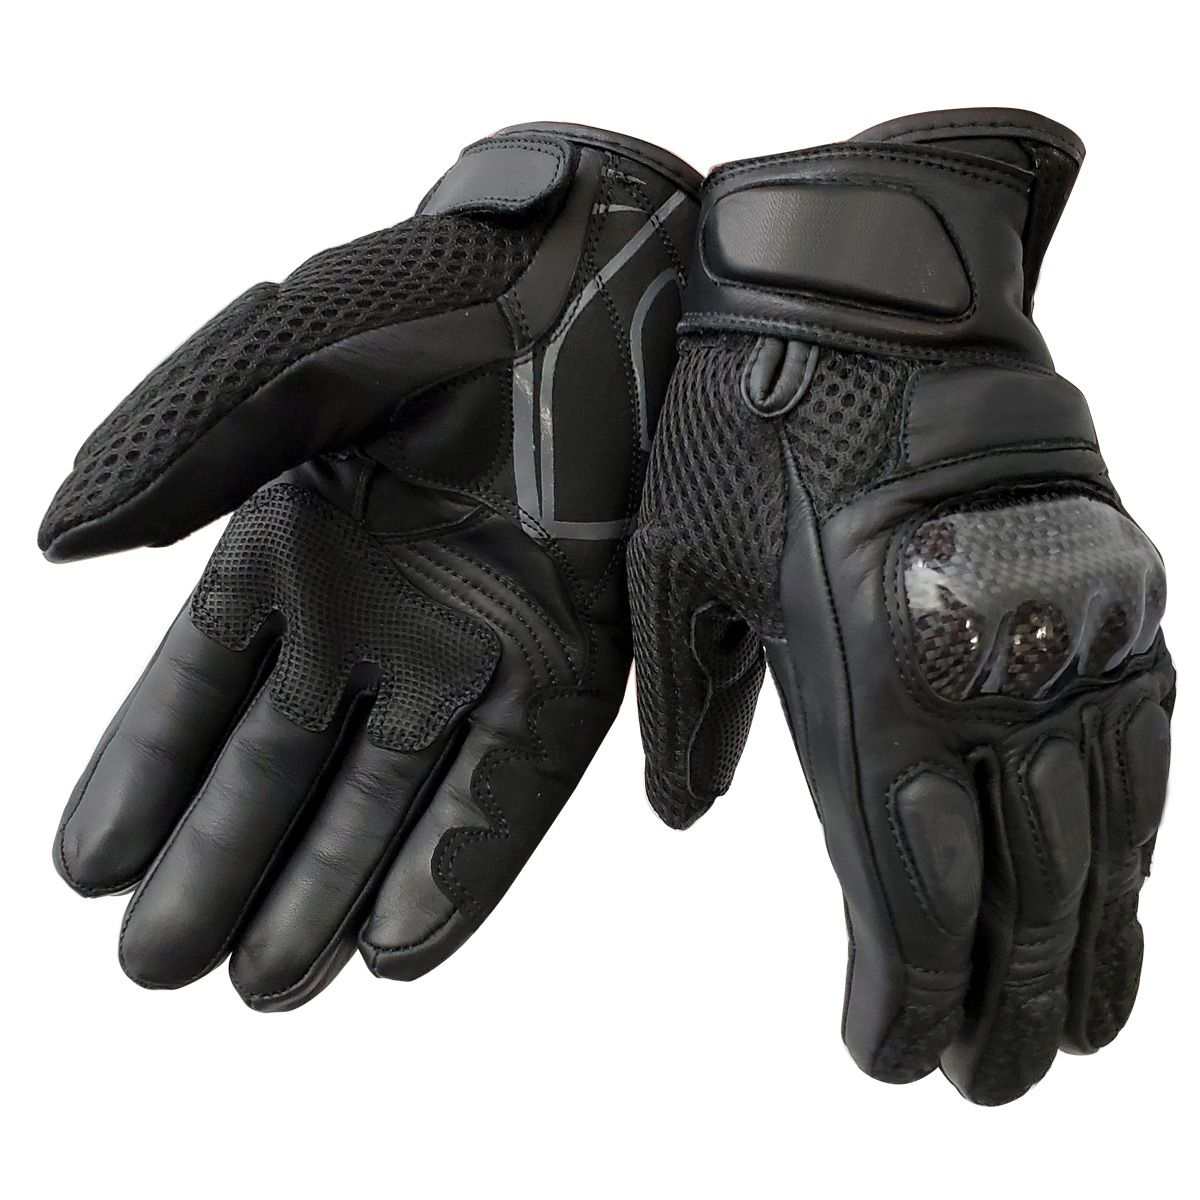 Genuine Leather Carbon Fiber durable waterproof motorcycle gloves